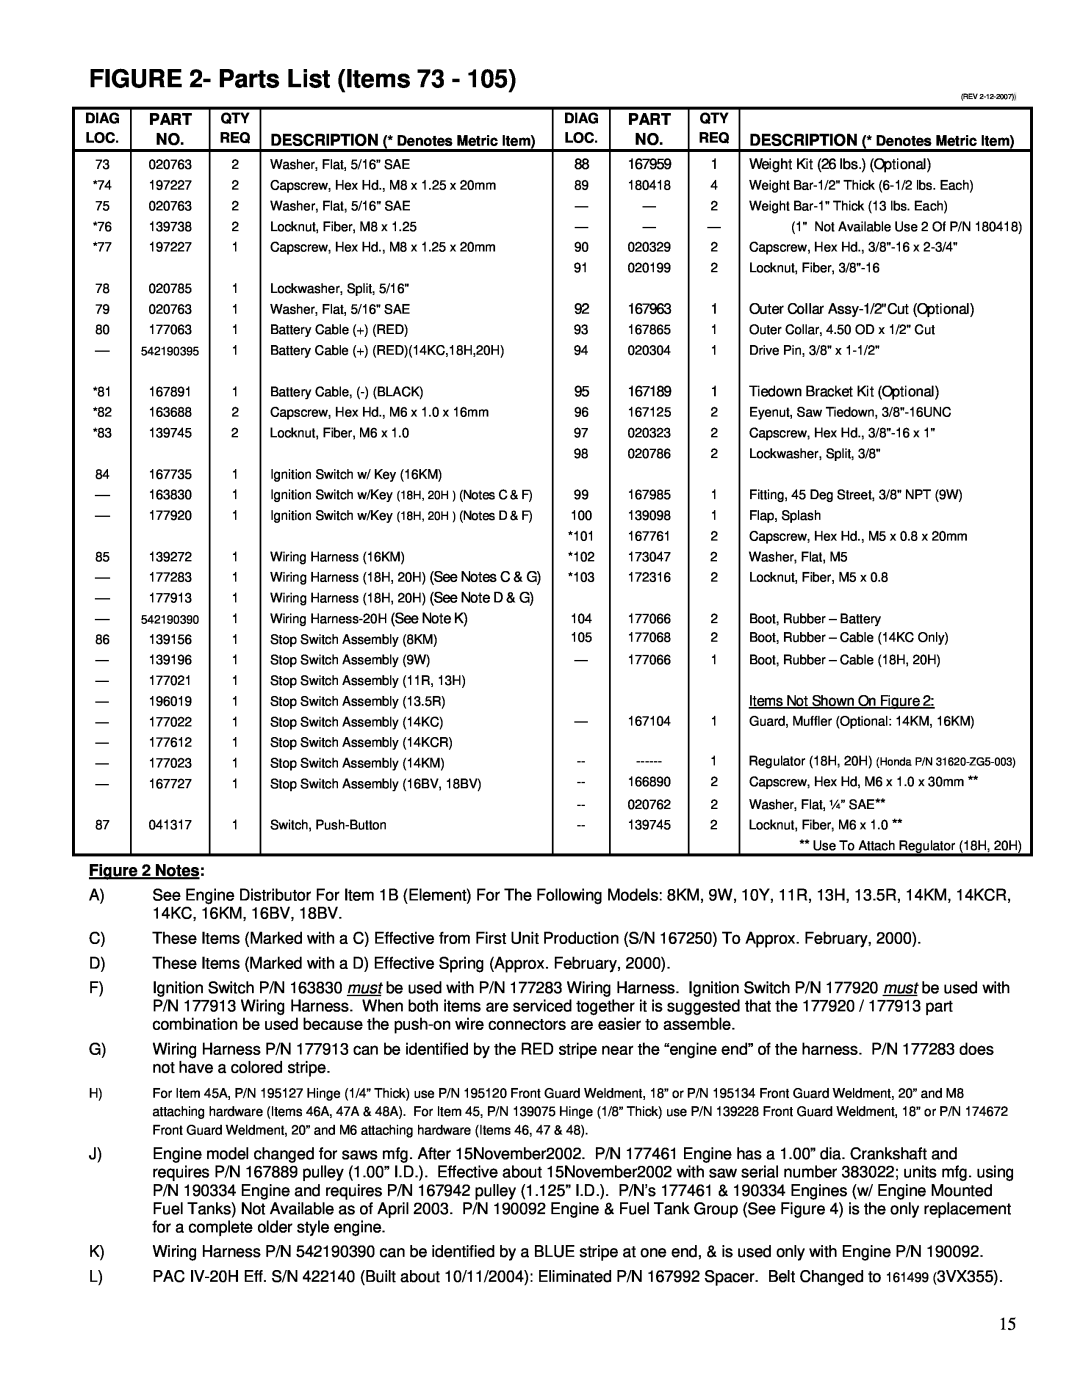 Husqvarna PAC IV-8KM Parts List Items 73, 167963, 167189, Tiedown Bracket Kit Optional, Items Not Shown On Figure 